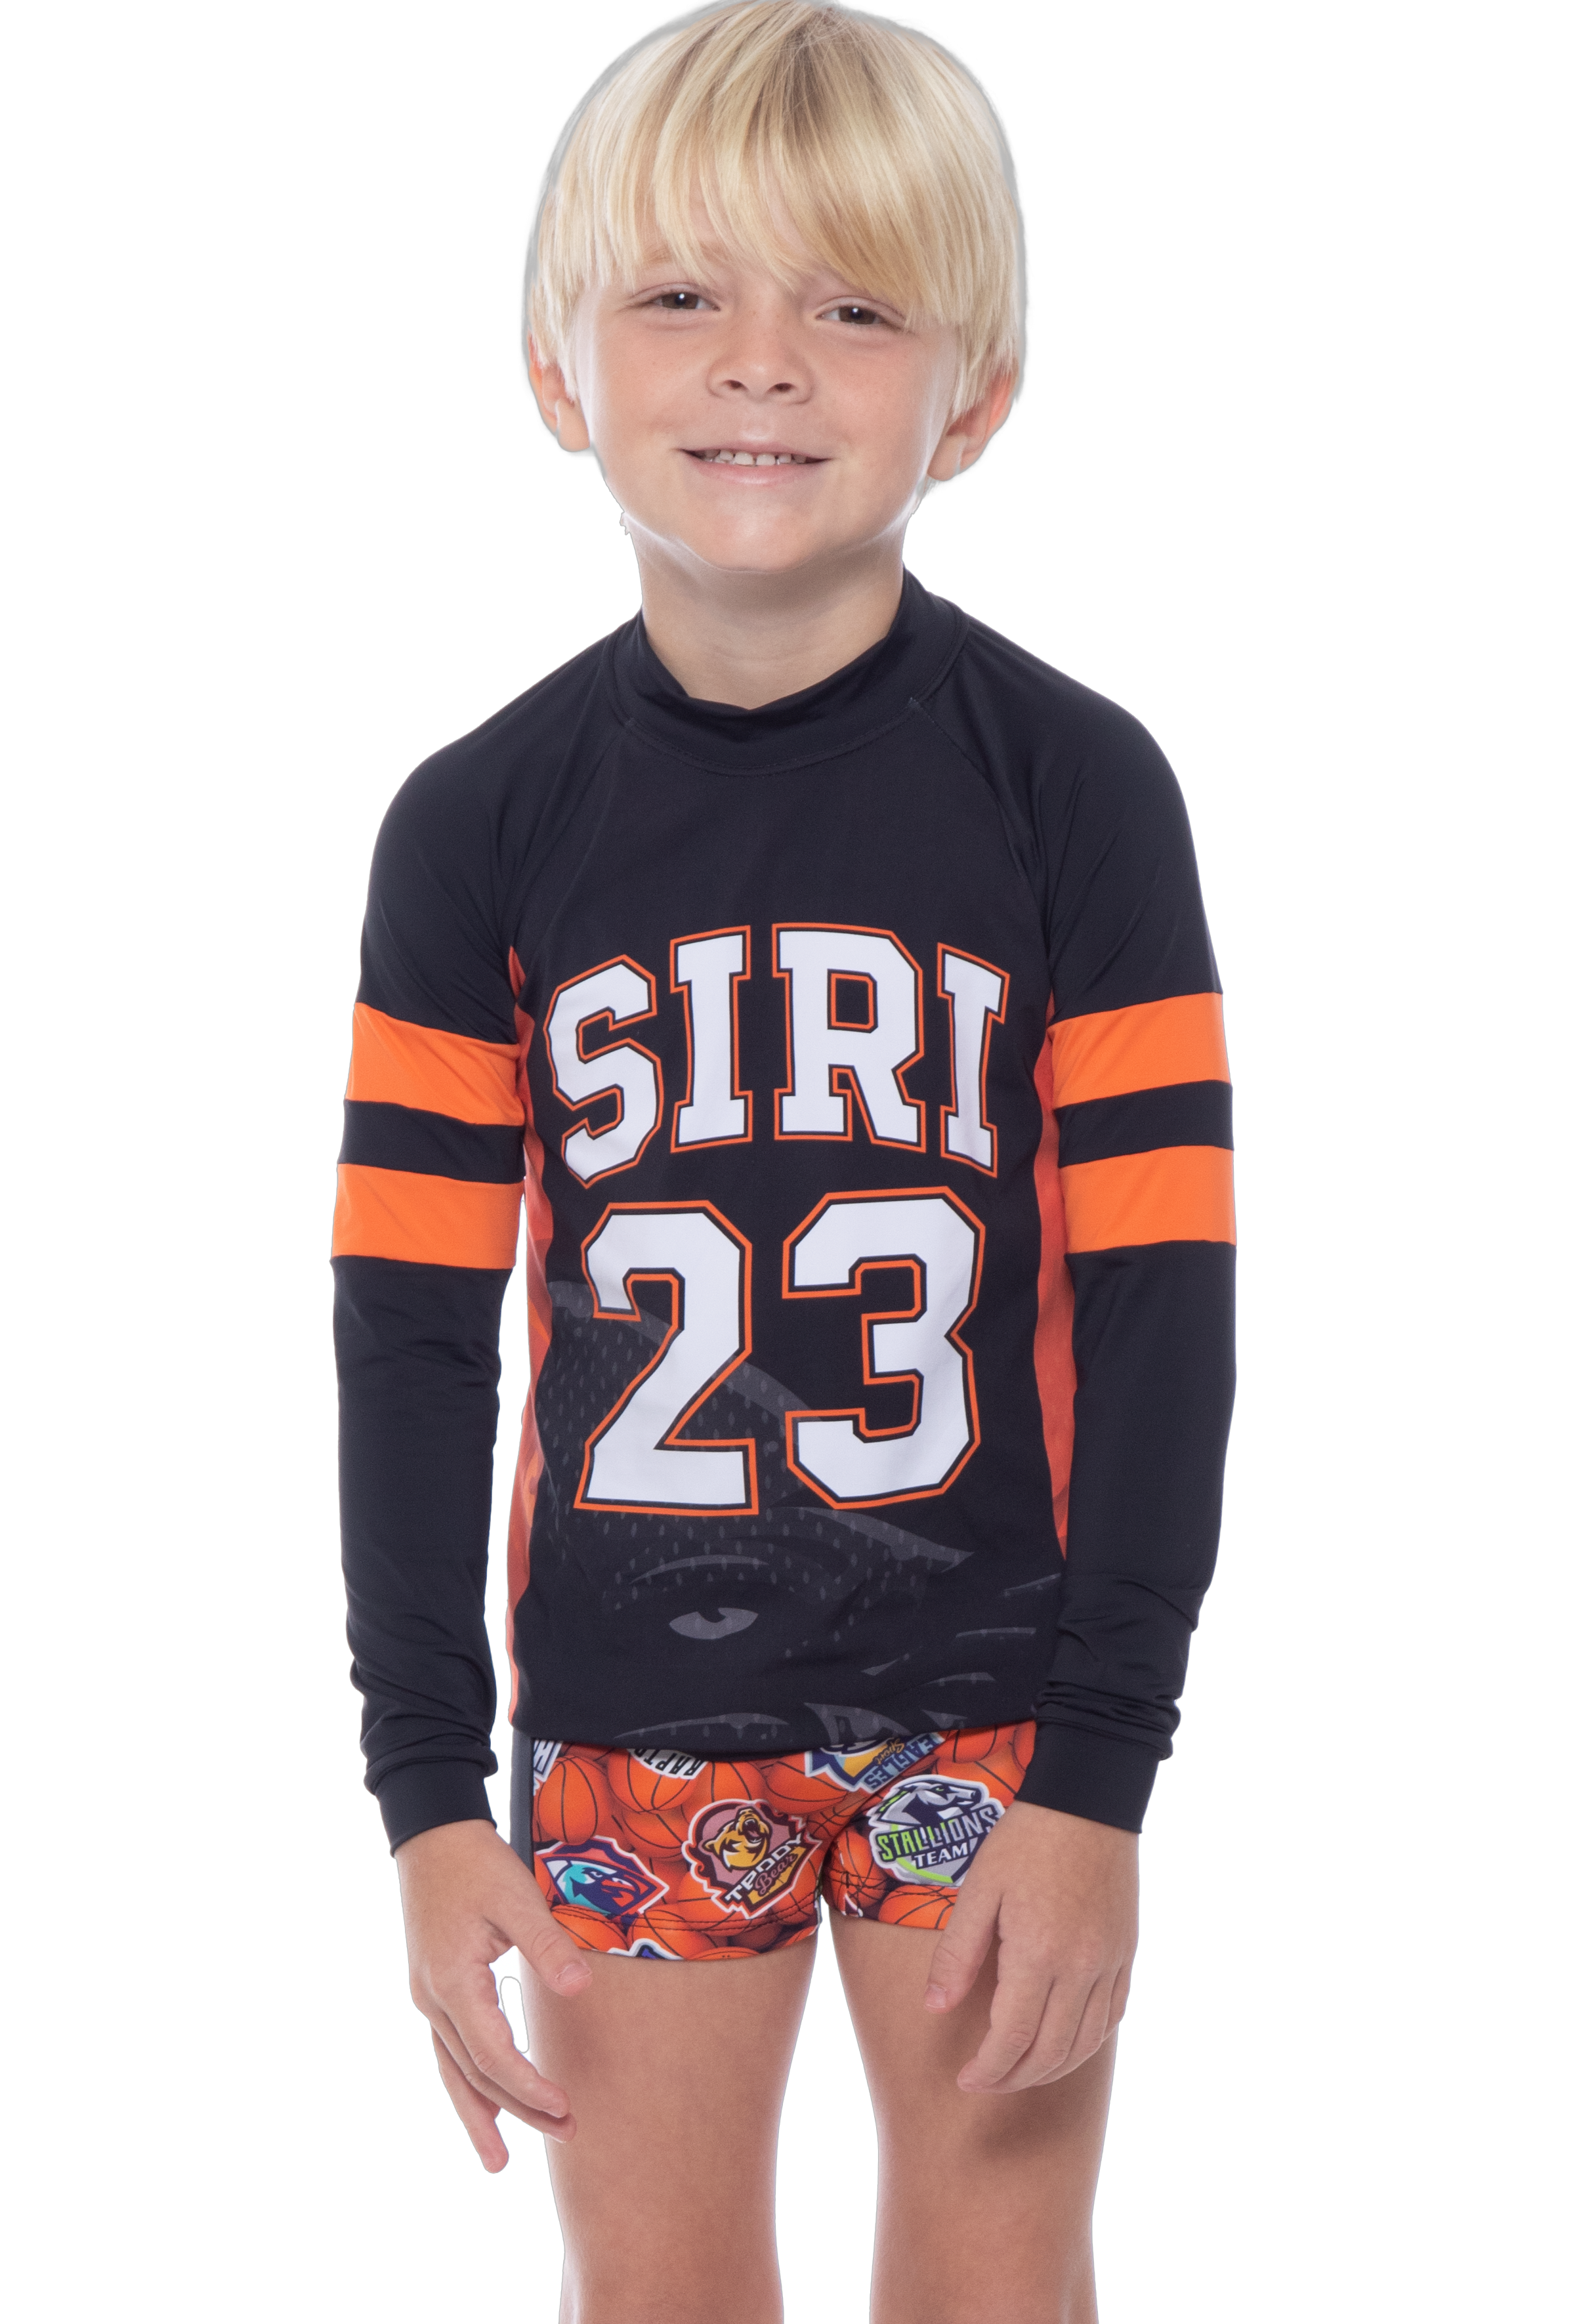 Blusa Kids Arthur Basket 37967 - Siri